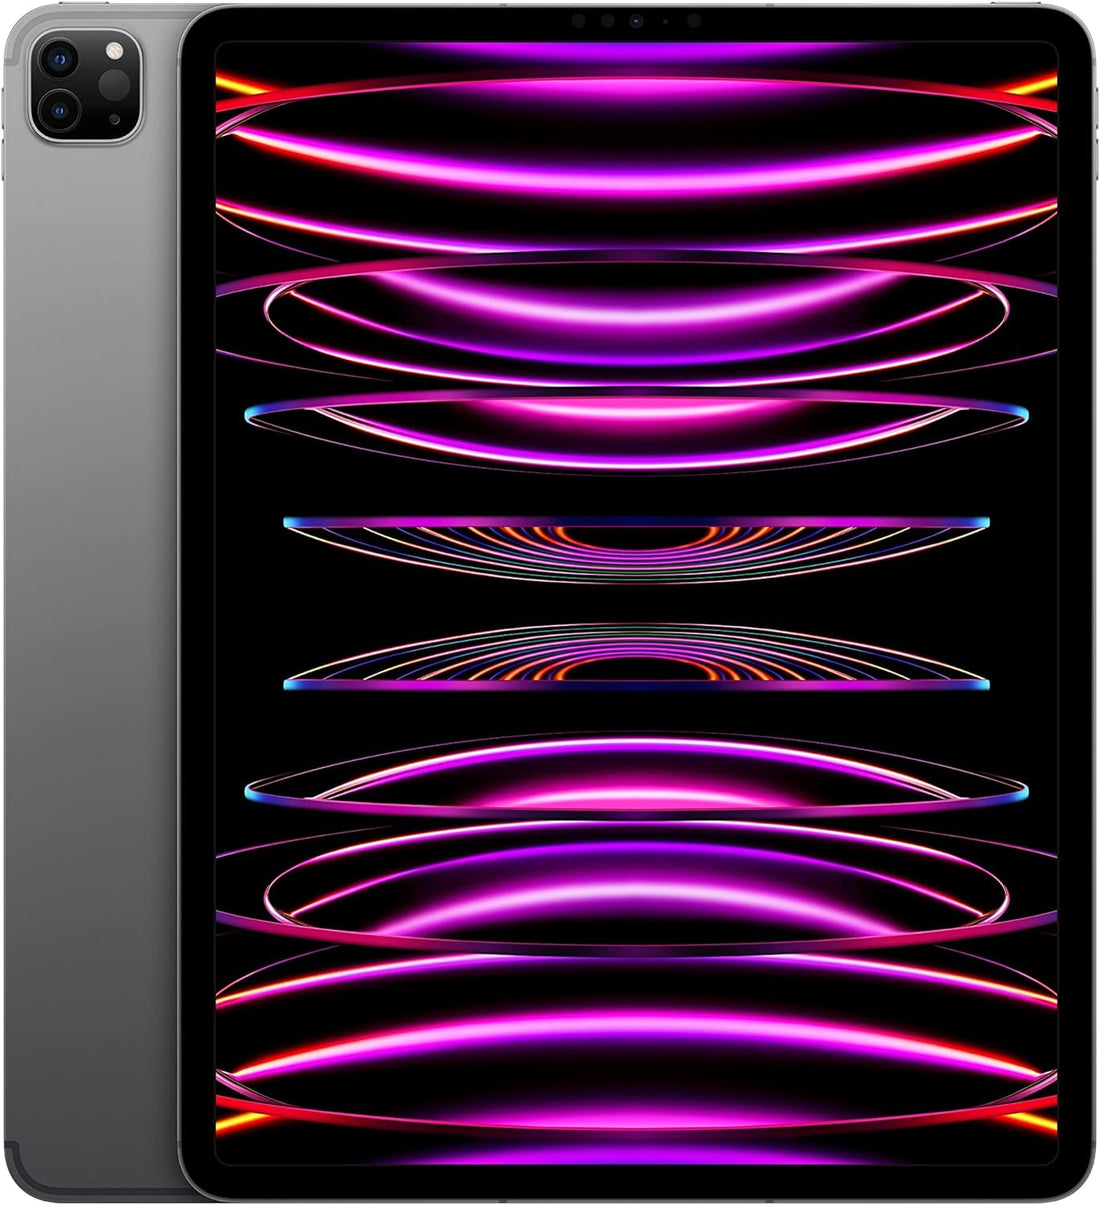 Apple iPad Pro 12.9-inch (6th Gen) 512GB, WIFI + Unlocked Cellular - Space Gray (Refurbished)